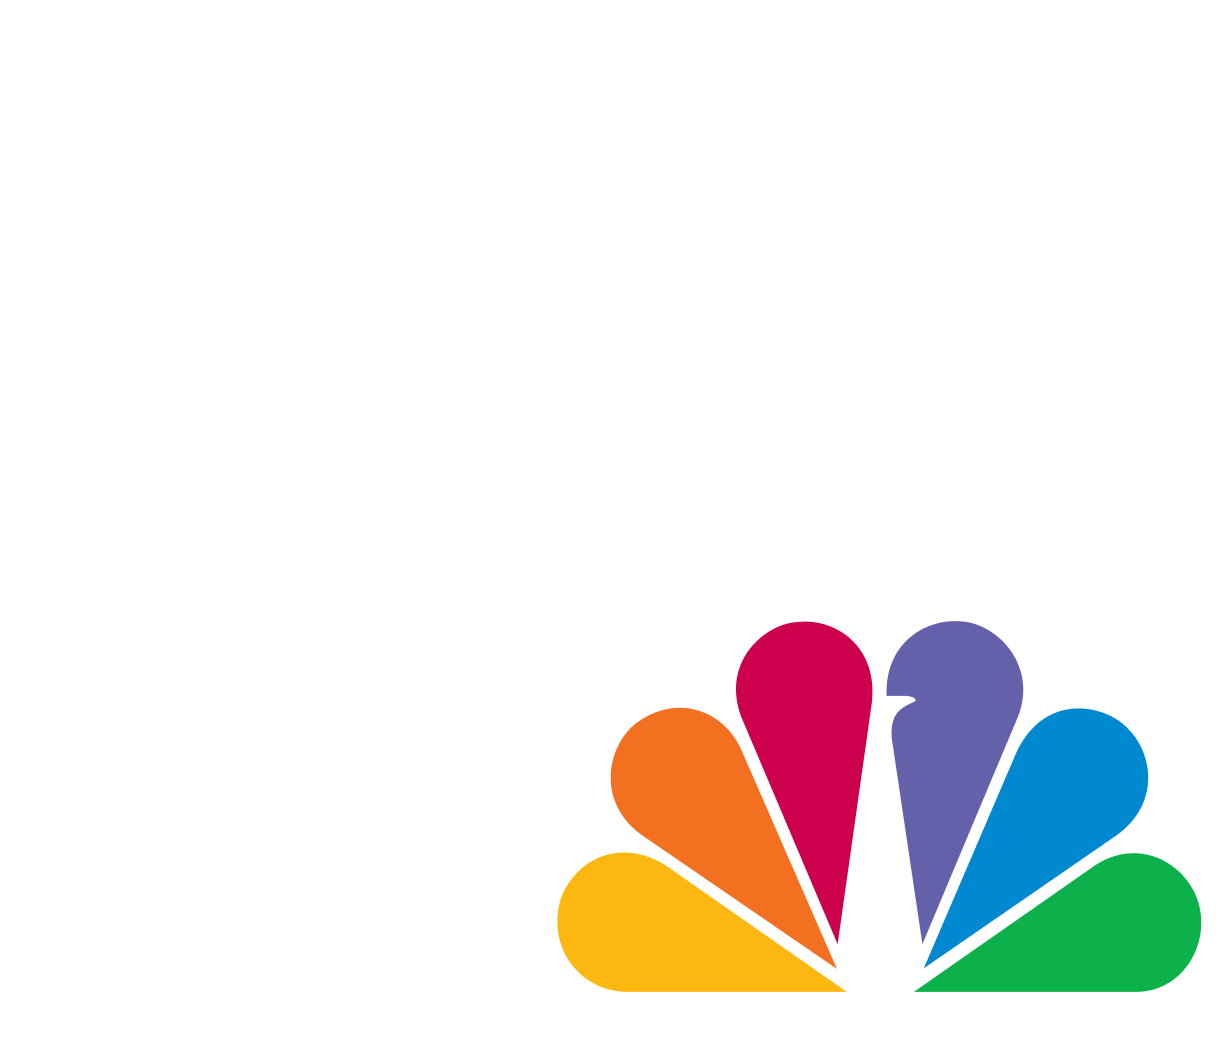 8 logo